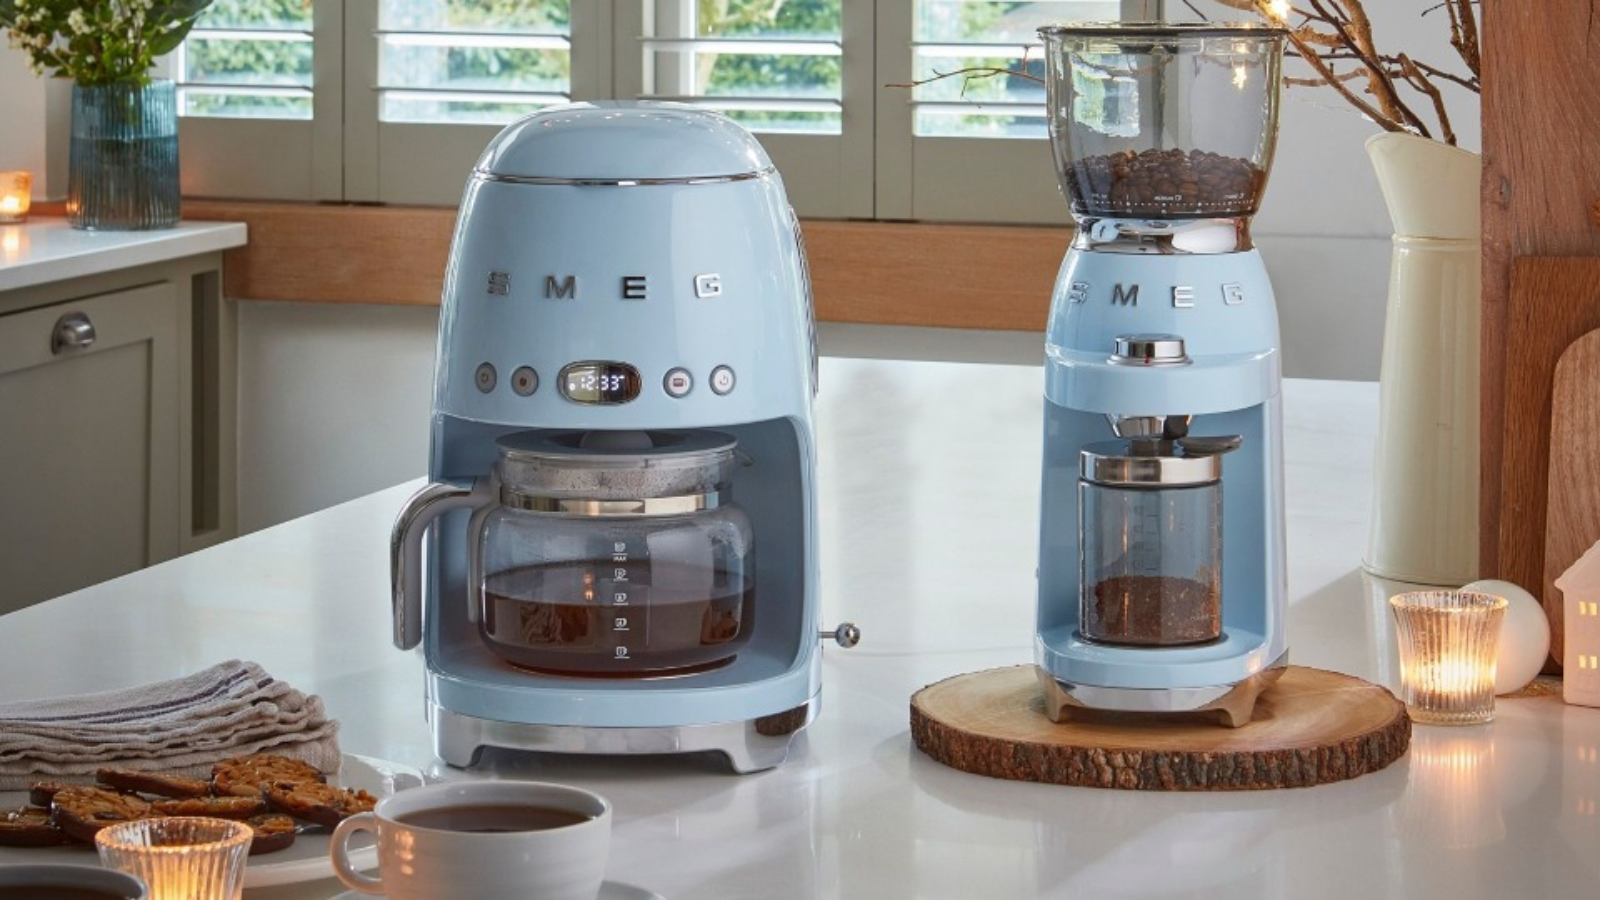 Smeg Drip Coffee Machine Review: Retro, Yet Competent